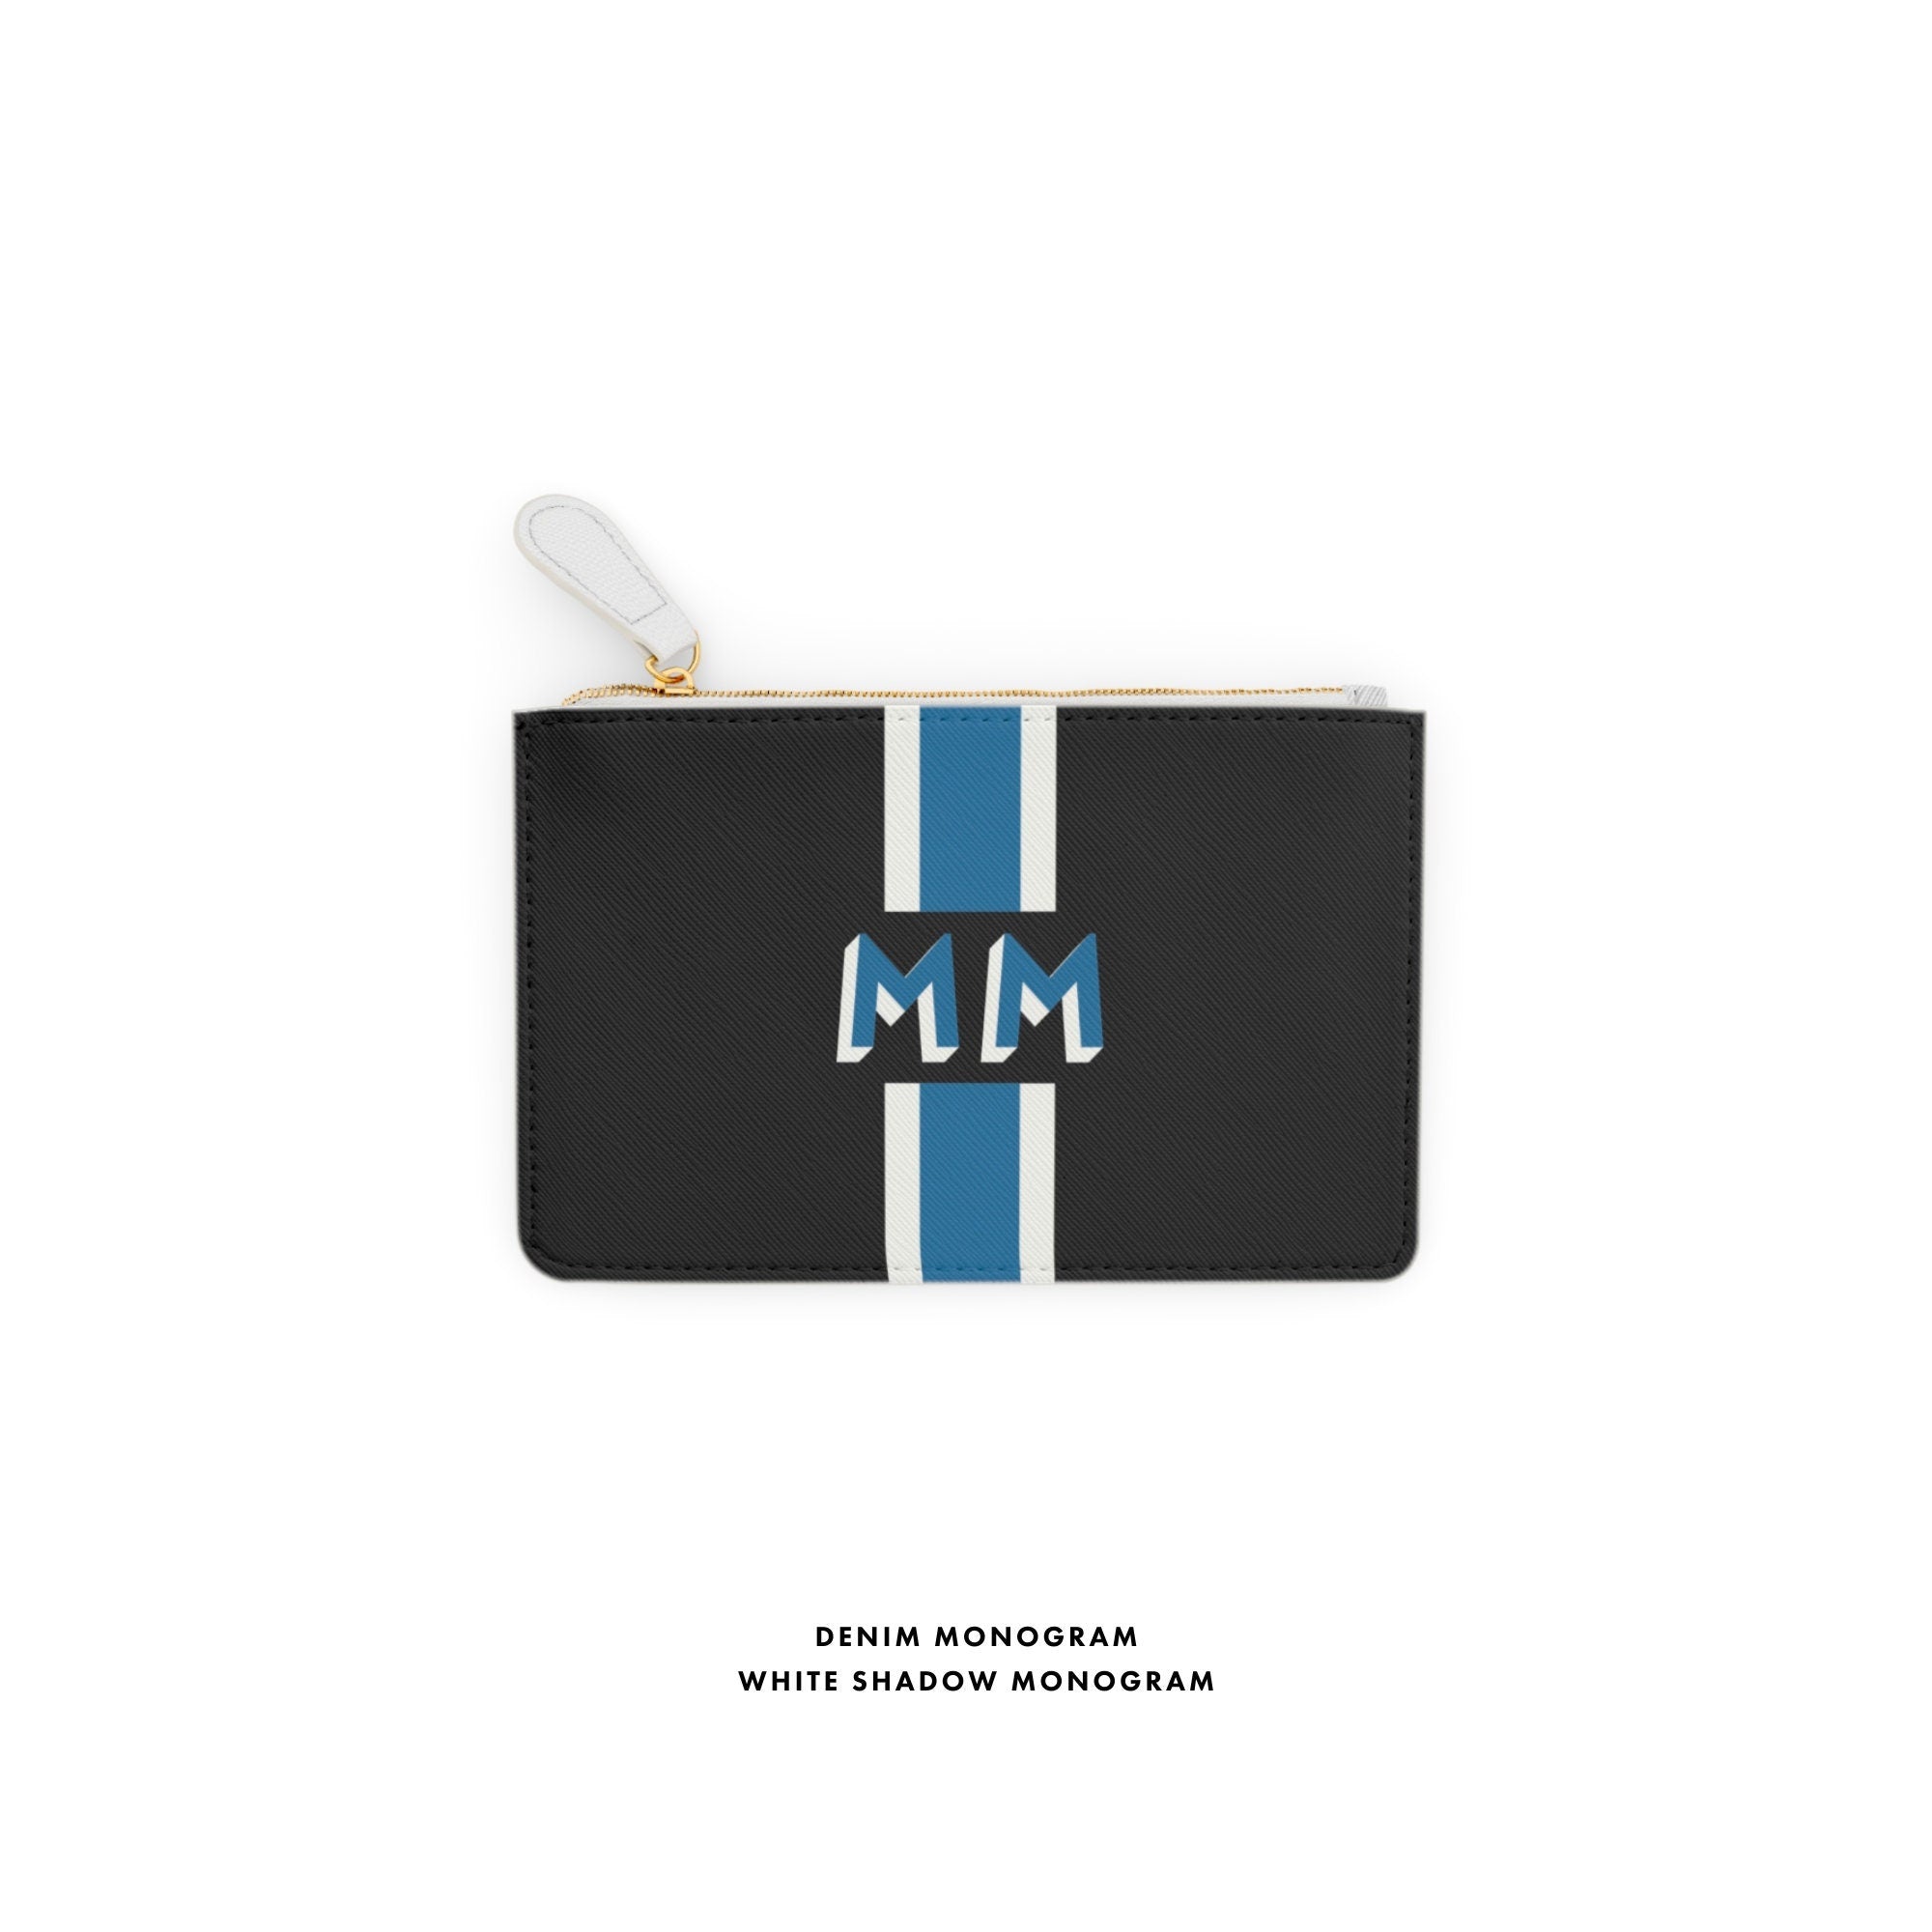 Shadow Monogram black Leather coin purse monogram wallet personalized wallet custom monogram wallet saffiano vegan leather pouch